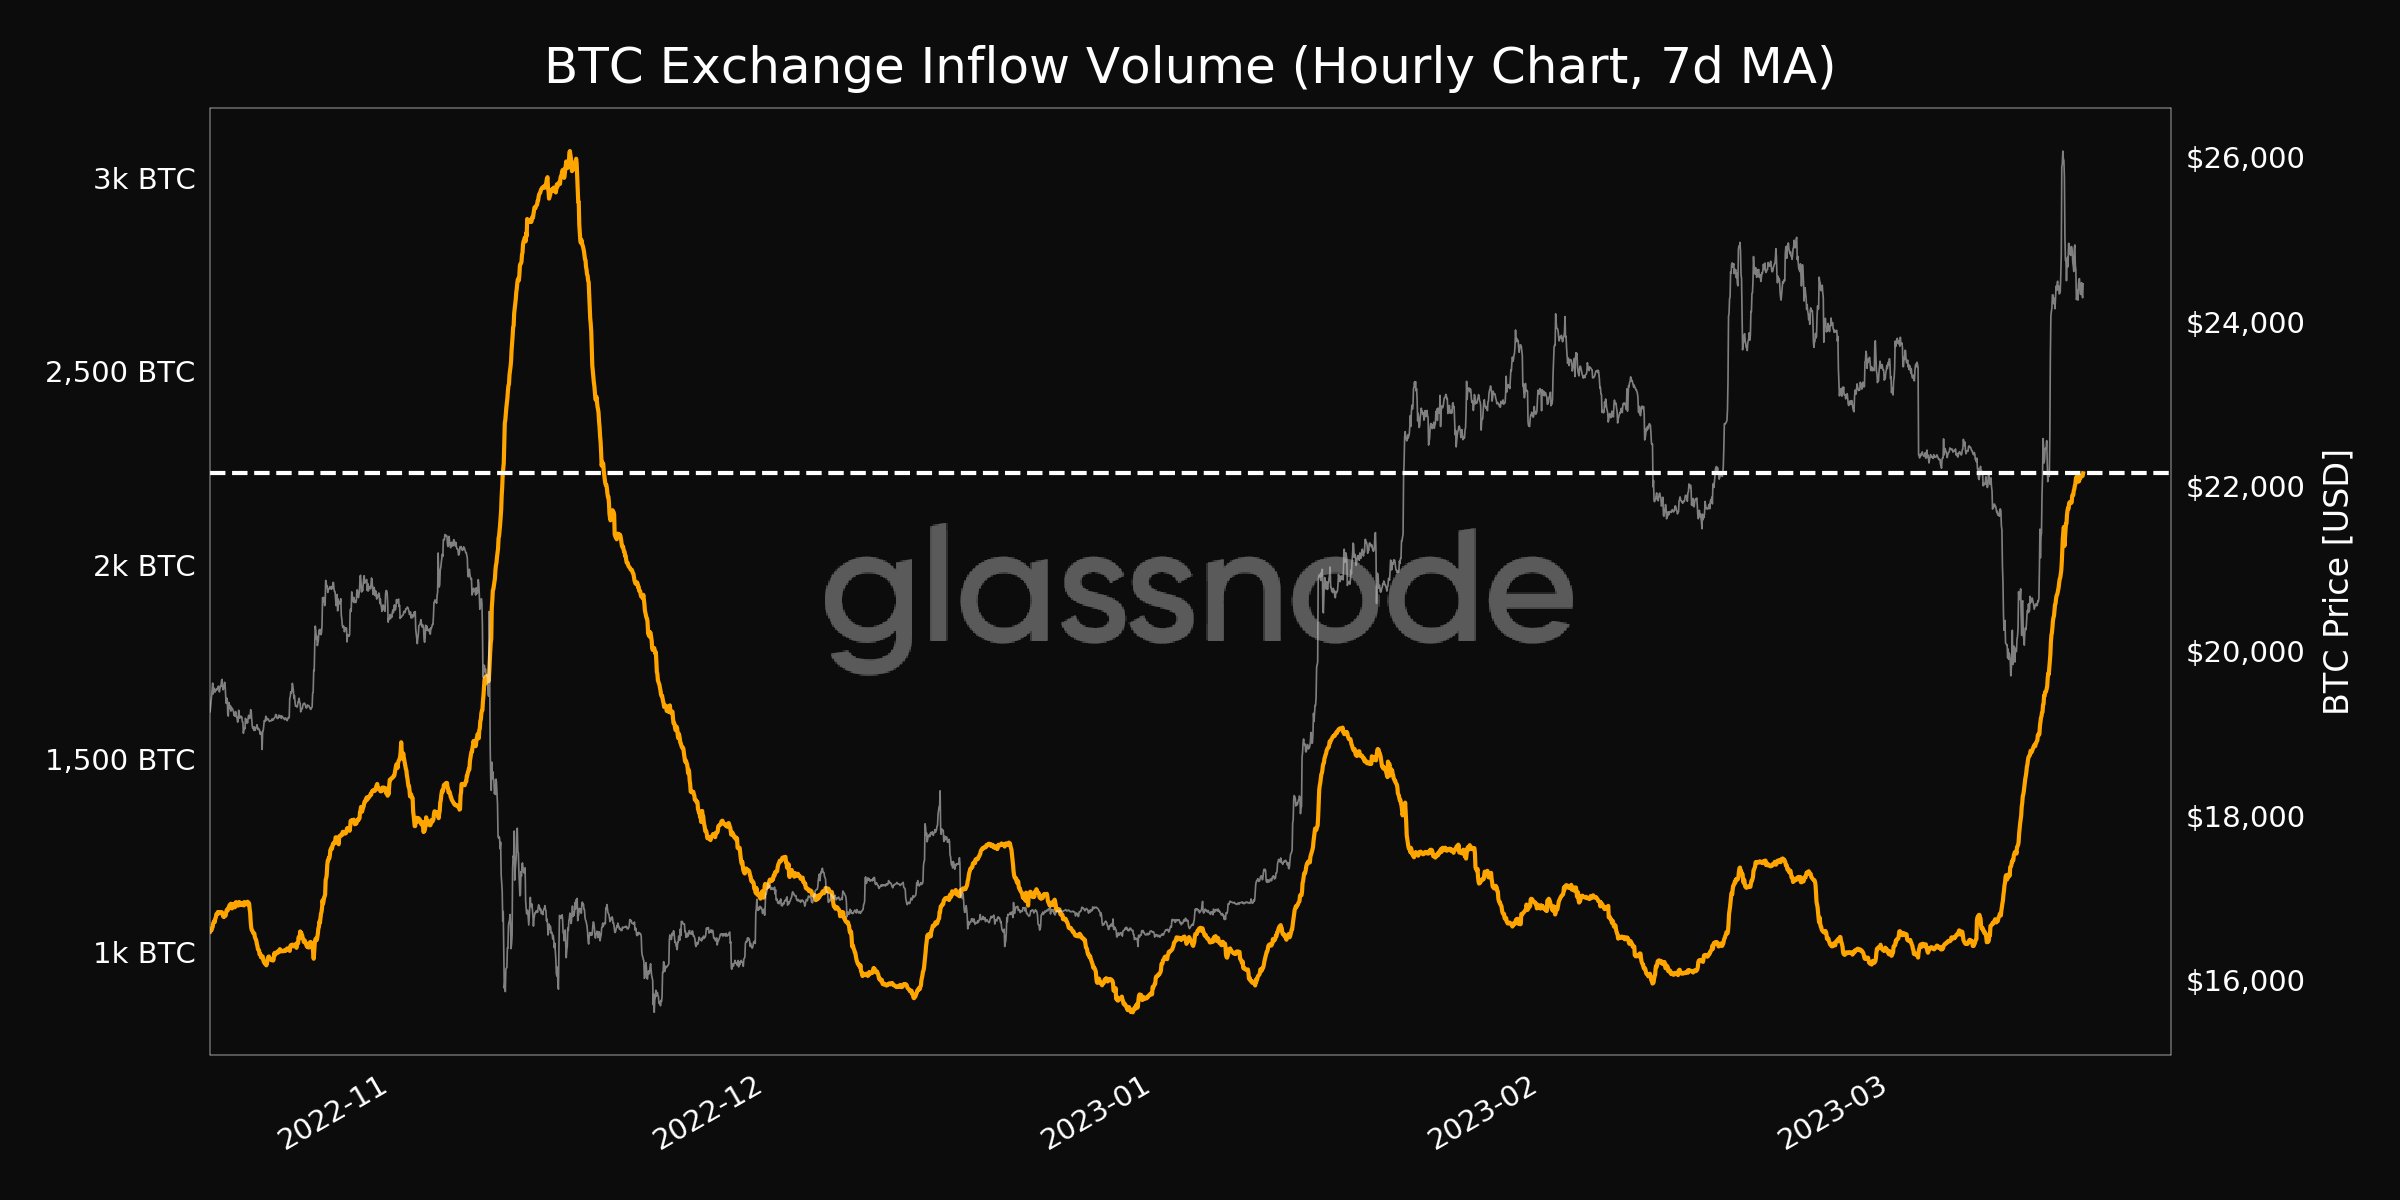 BTC exchange inflow volume (hourly chart, 7d MA)